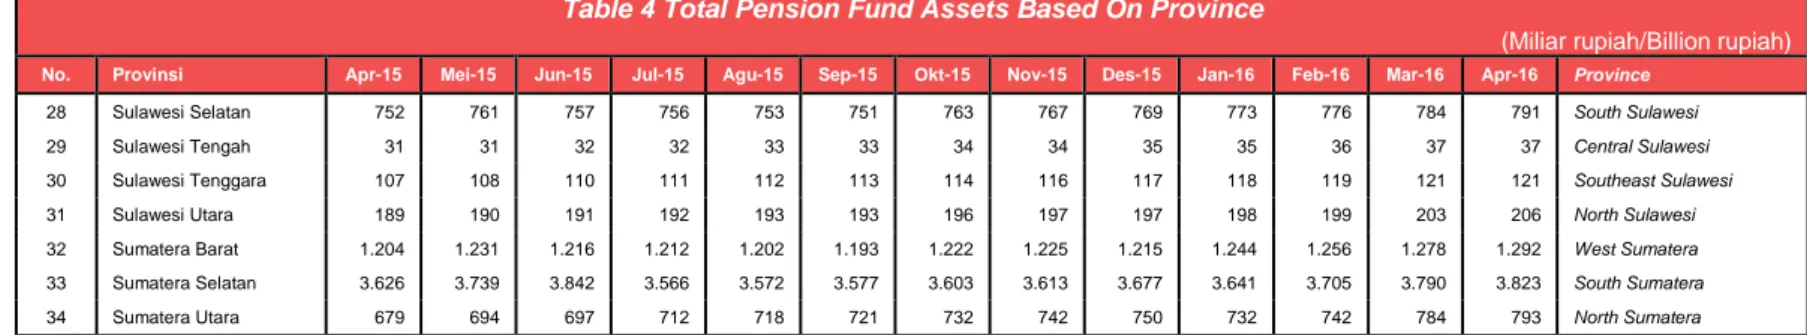 Tabel 4 Jumlah Aset Dana Pensiun Berdasarkan Provinsi  Table 4 Total Pension Fund Assets Based On Province 